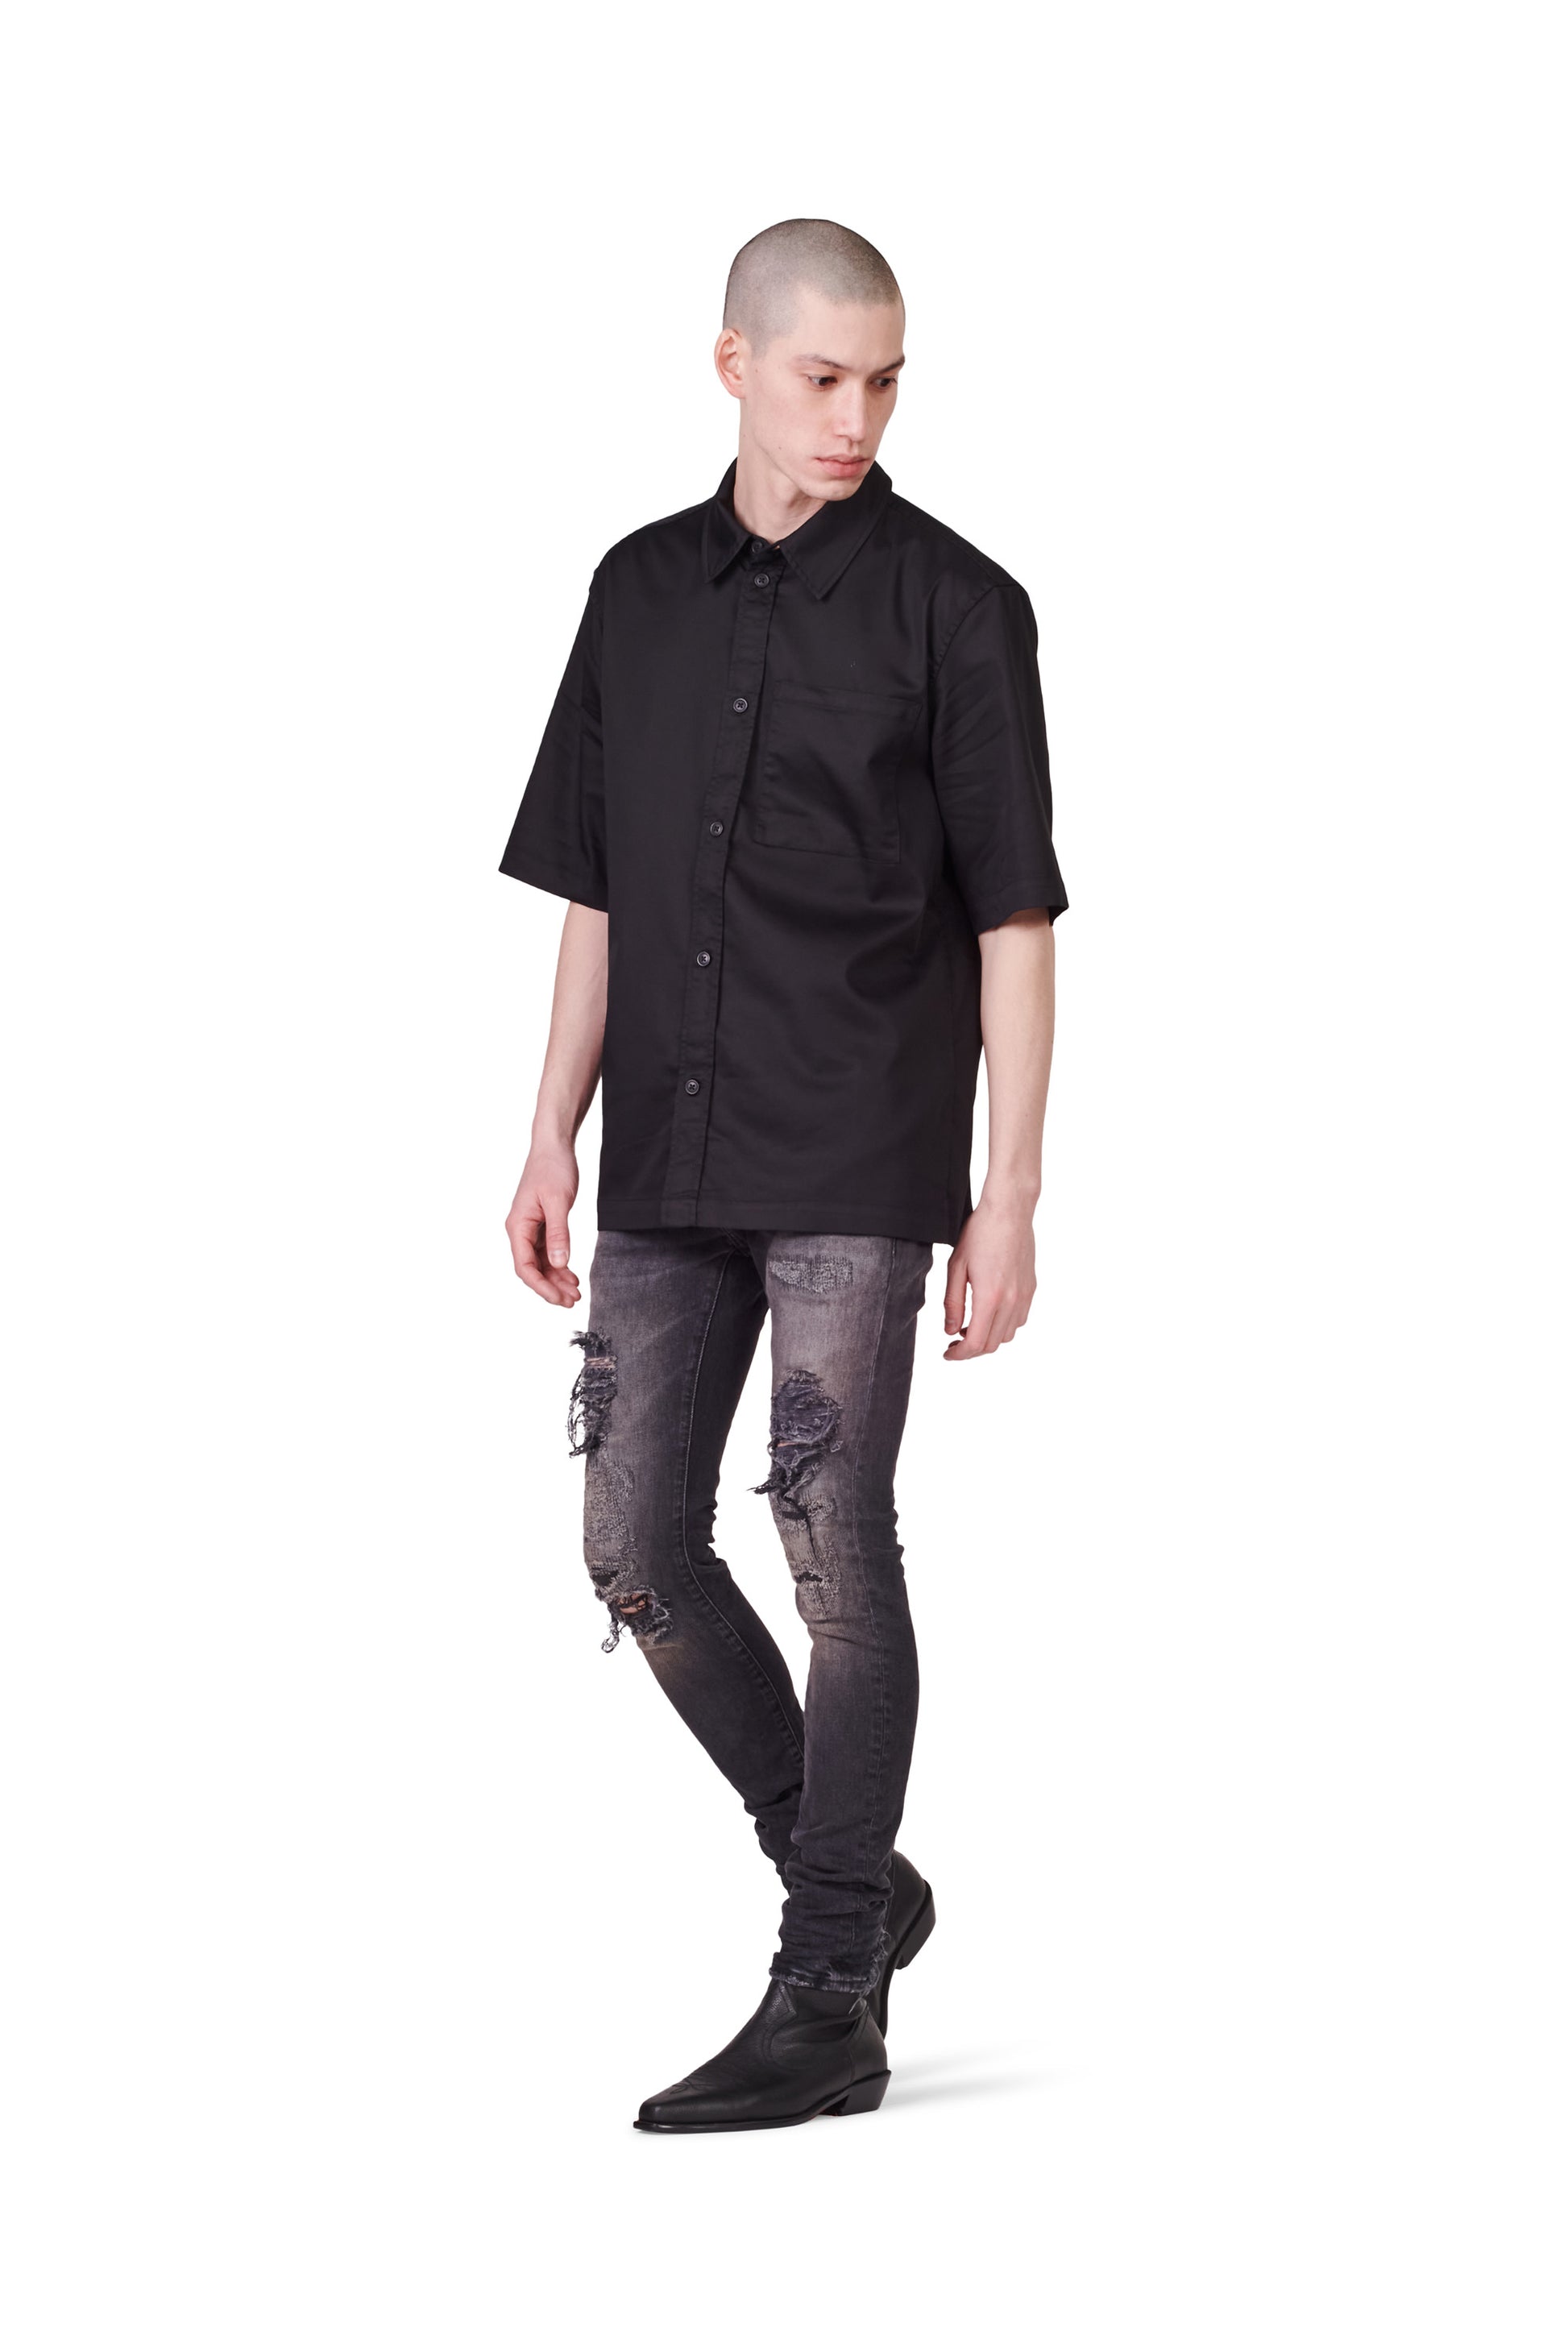 PURPLE BRAND - Men's Denim Jean - Low Rise Skinny - Style No. P001 - Black Four Pocket Destroy- Model Styled Pose 